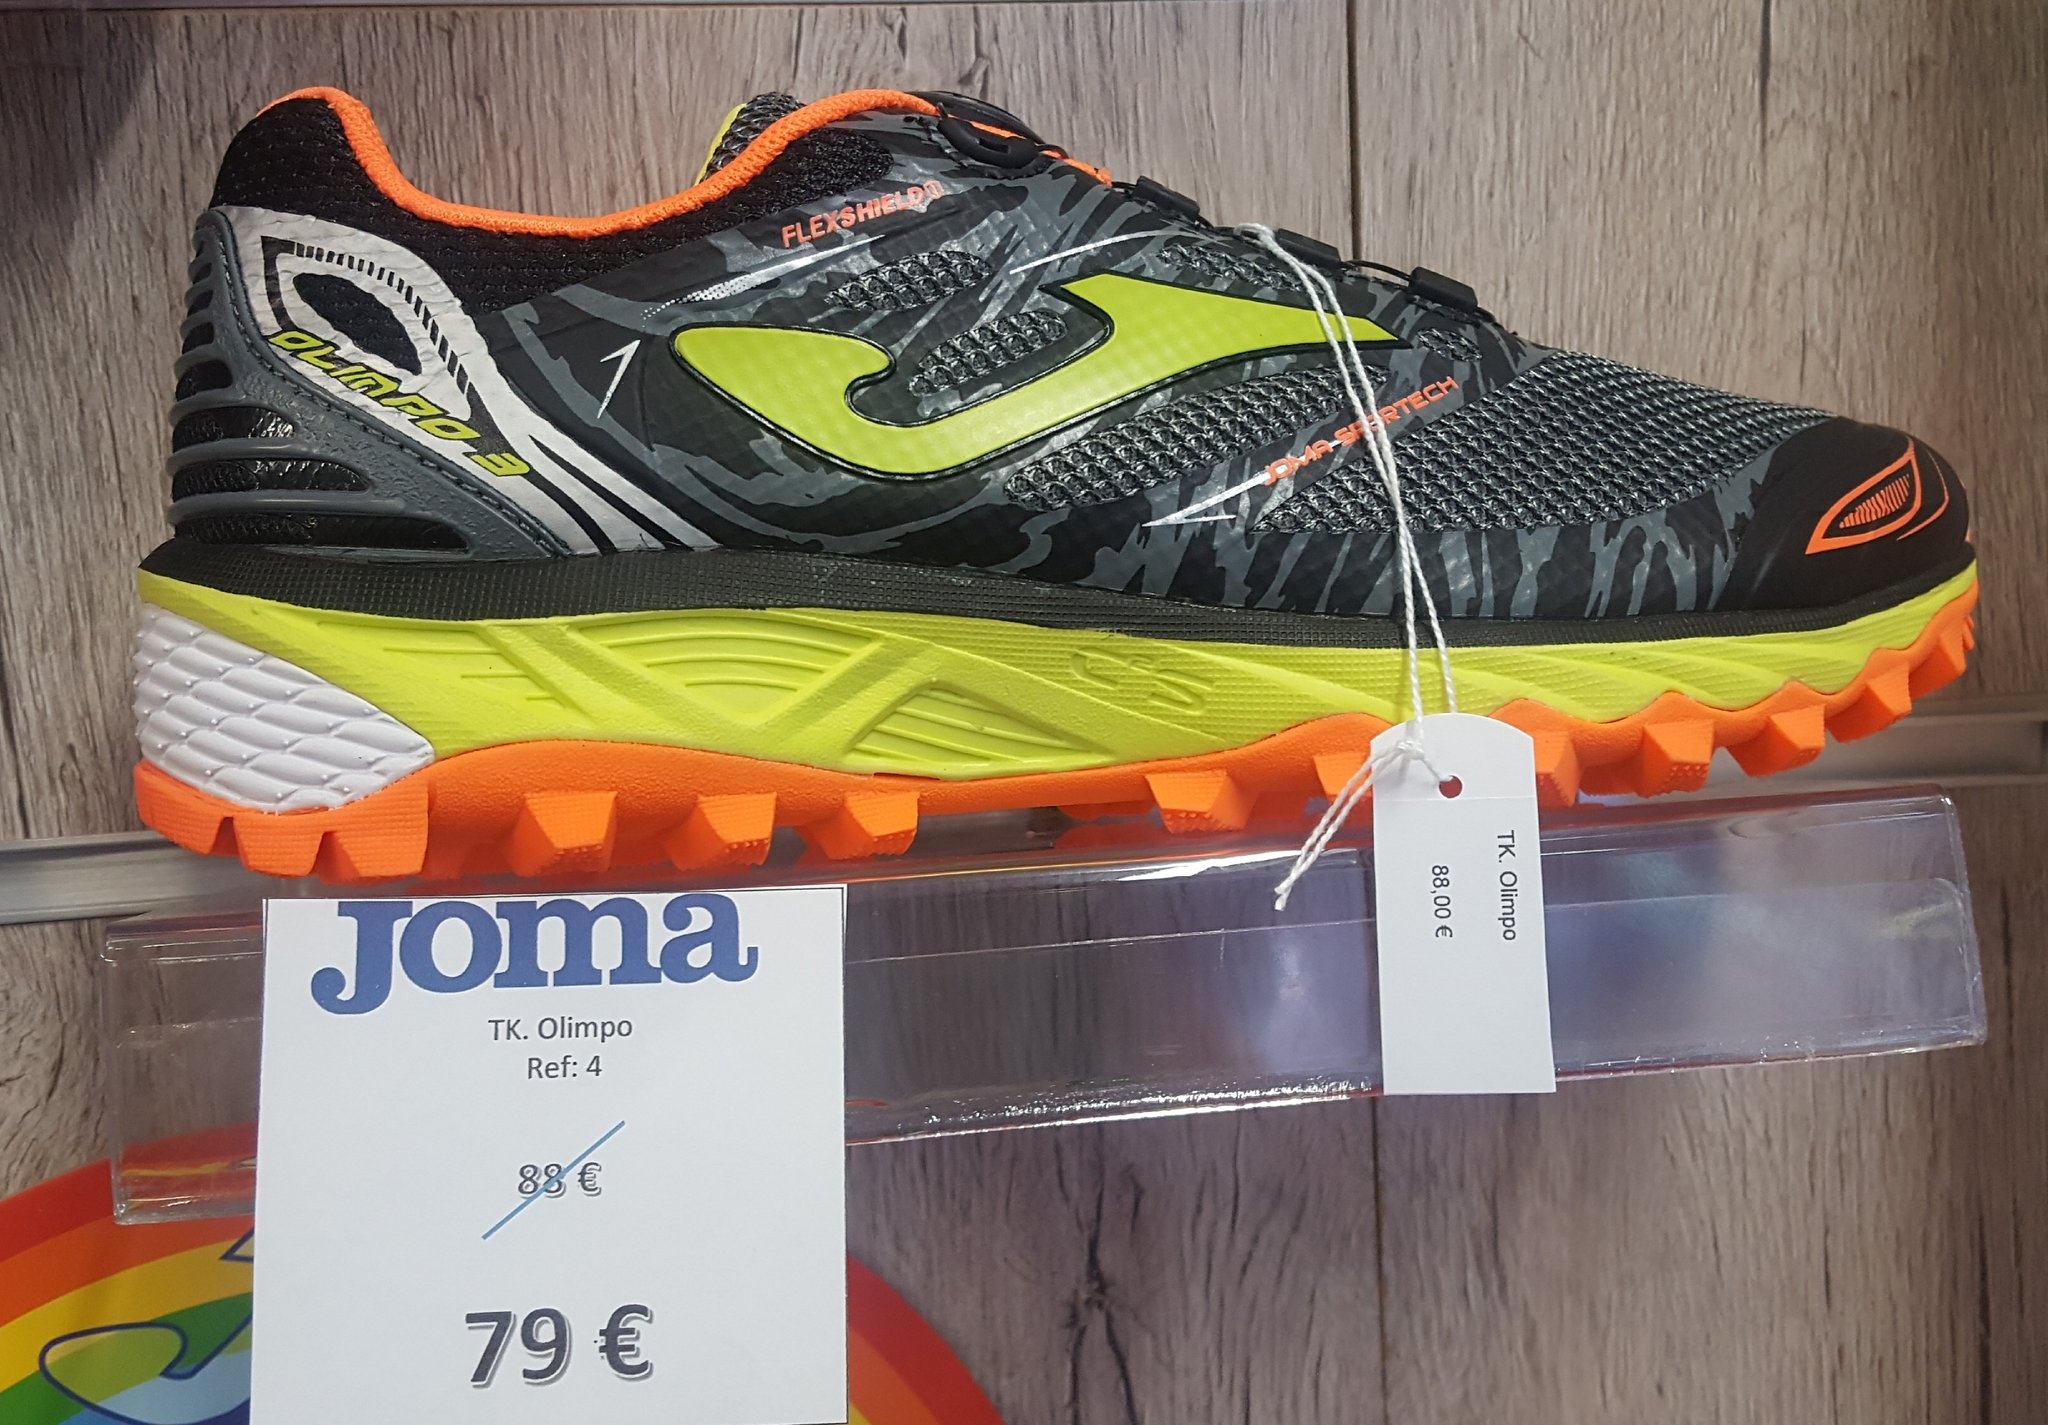 Andar Sports Andorra on Twitter: zapatillas #ofertas #ofertazapatillas #joma https://t.co/FqlrNM9rGD"